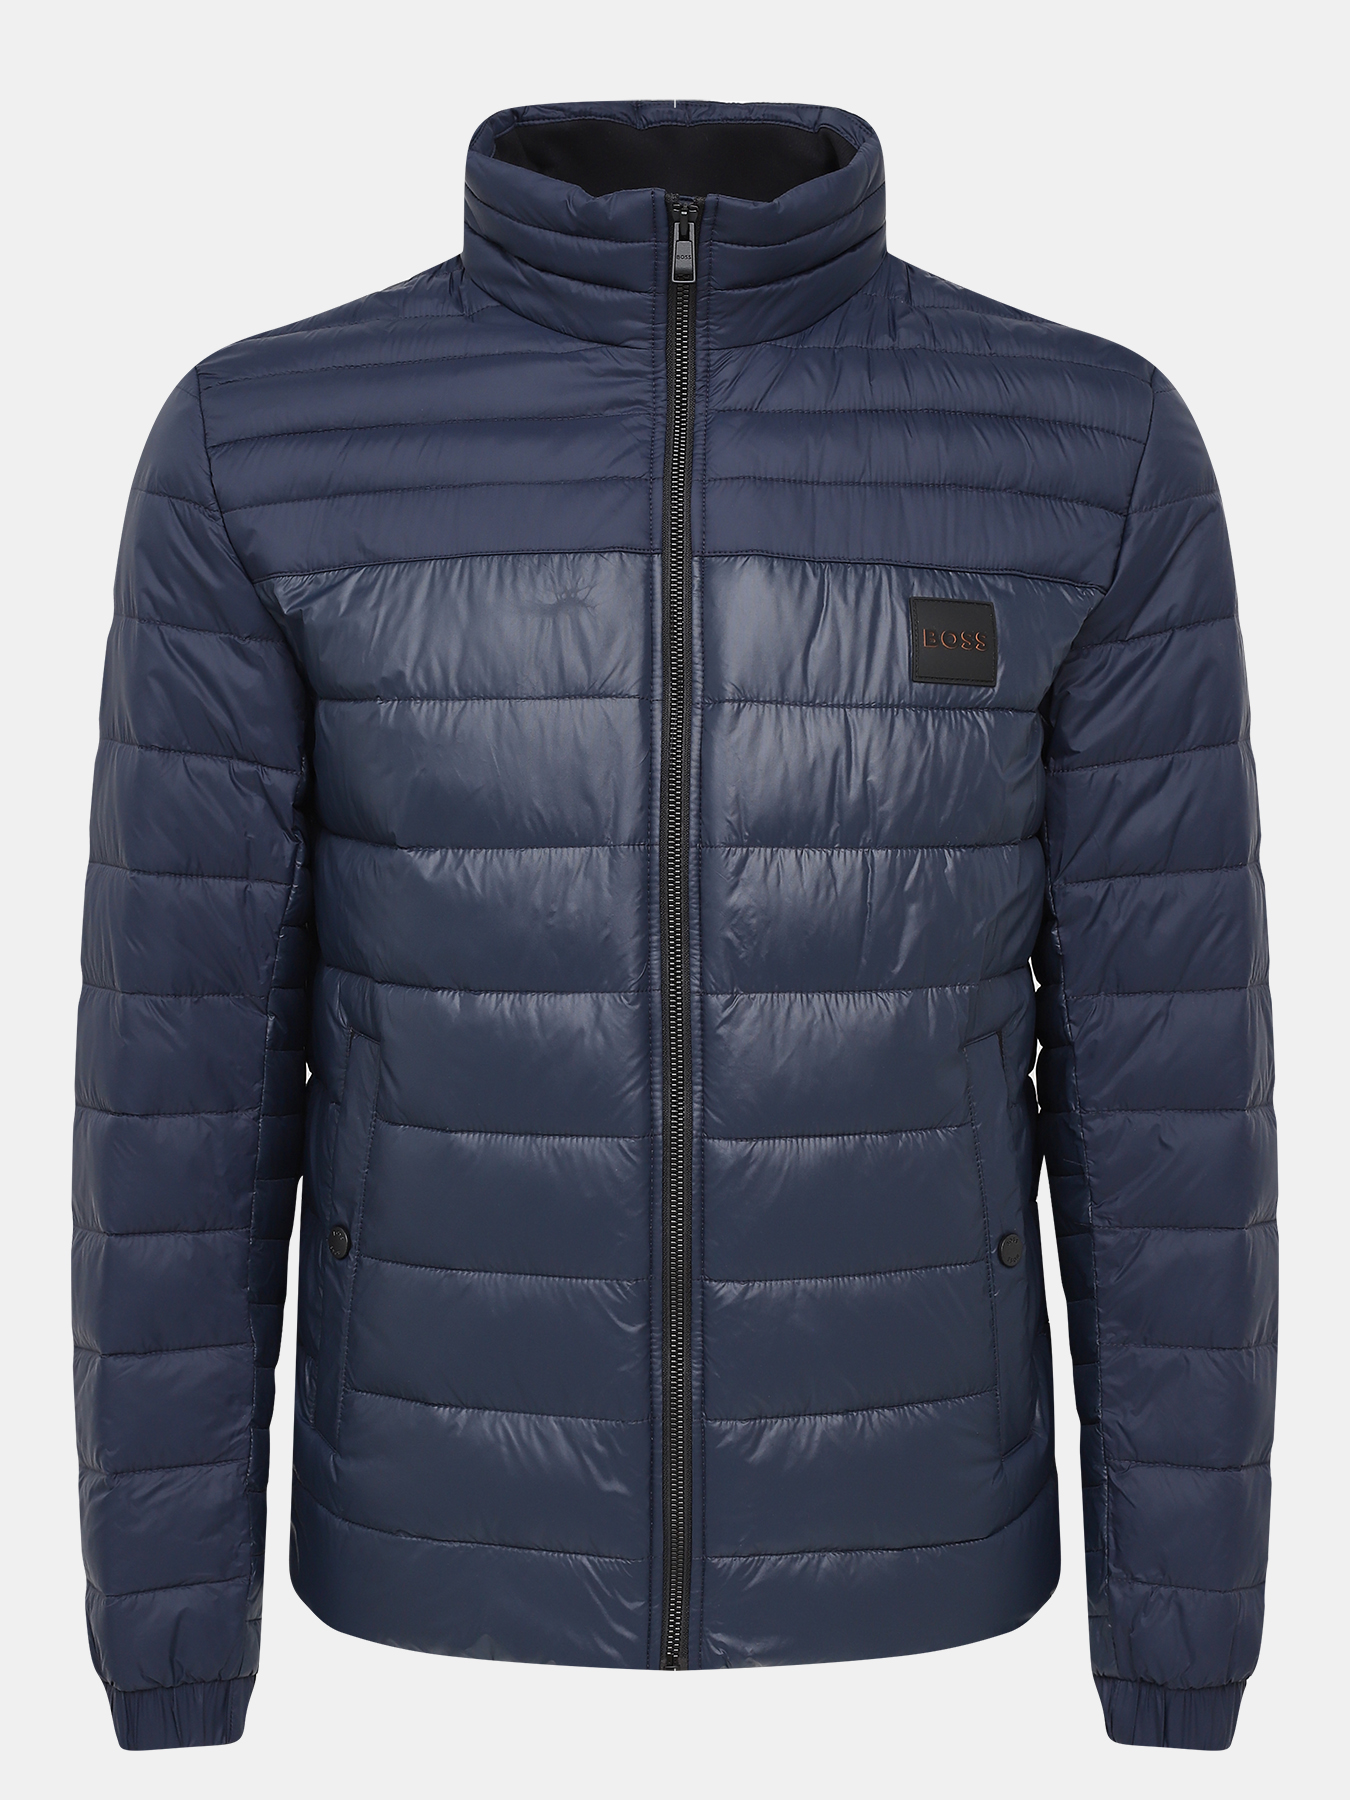 Куртка Oden big BOSS 434135-029, цвет темно-синий, размер 56 - фото 1